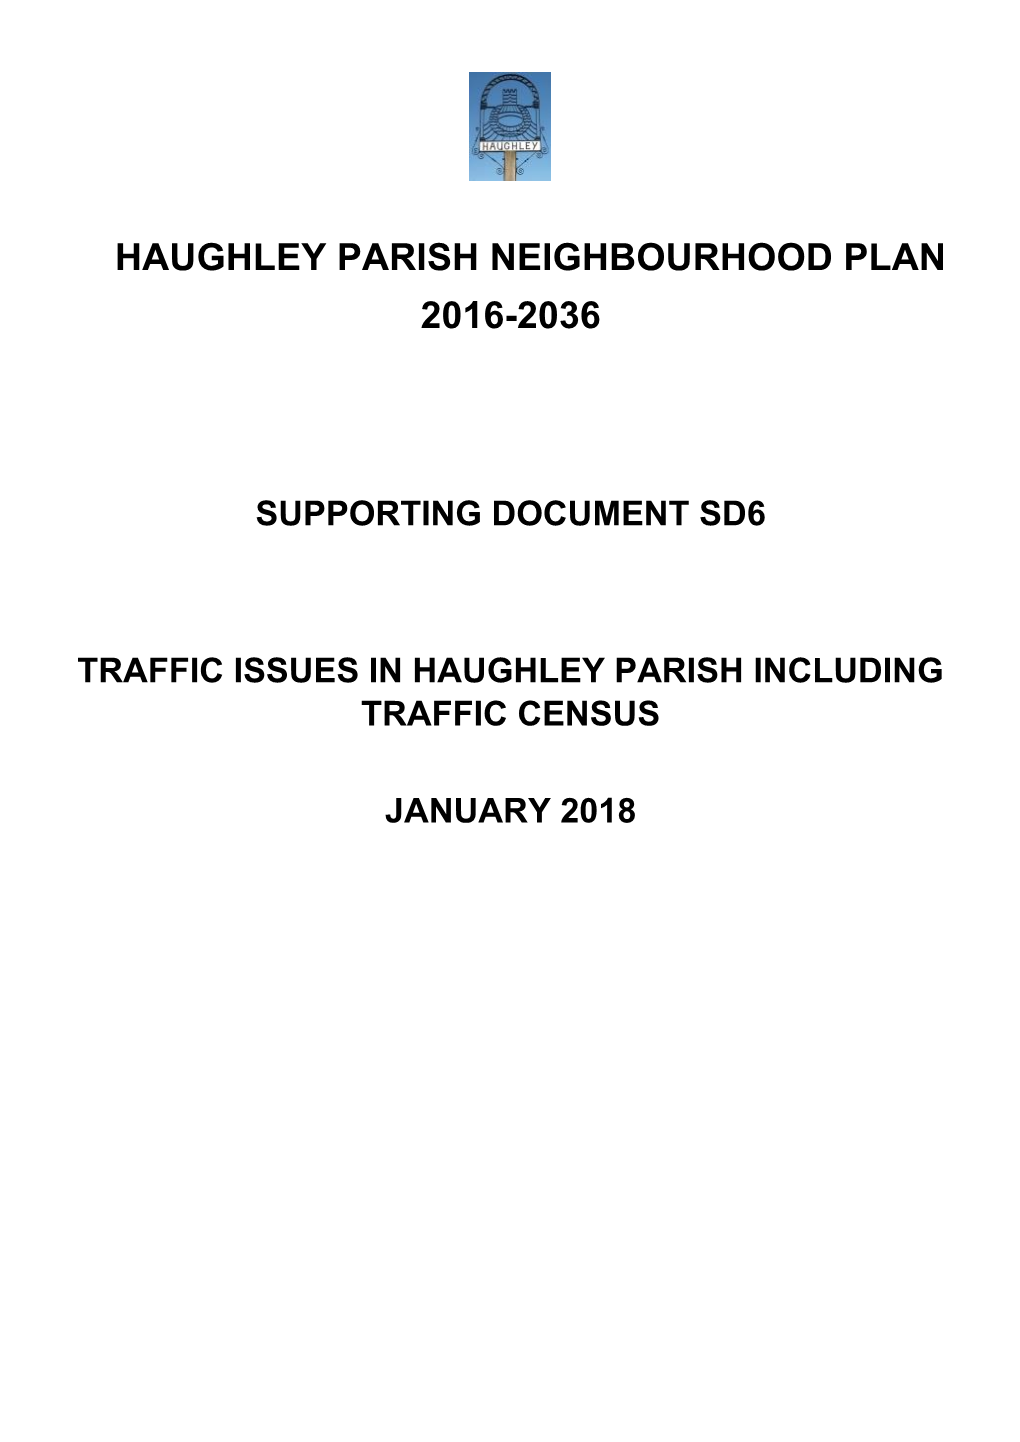 Haughley Parish Neighbourhood Plan 2016-2036